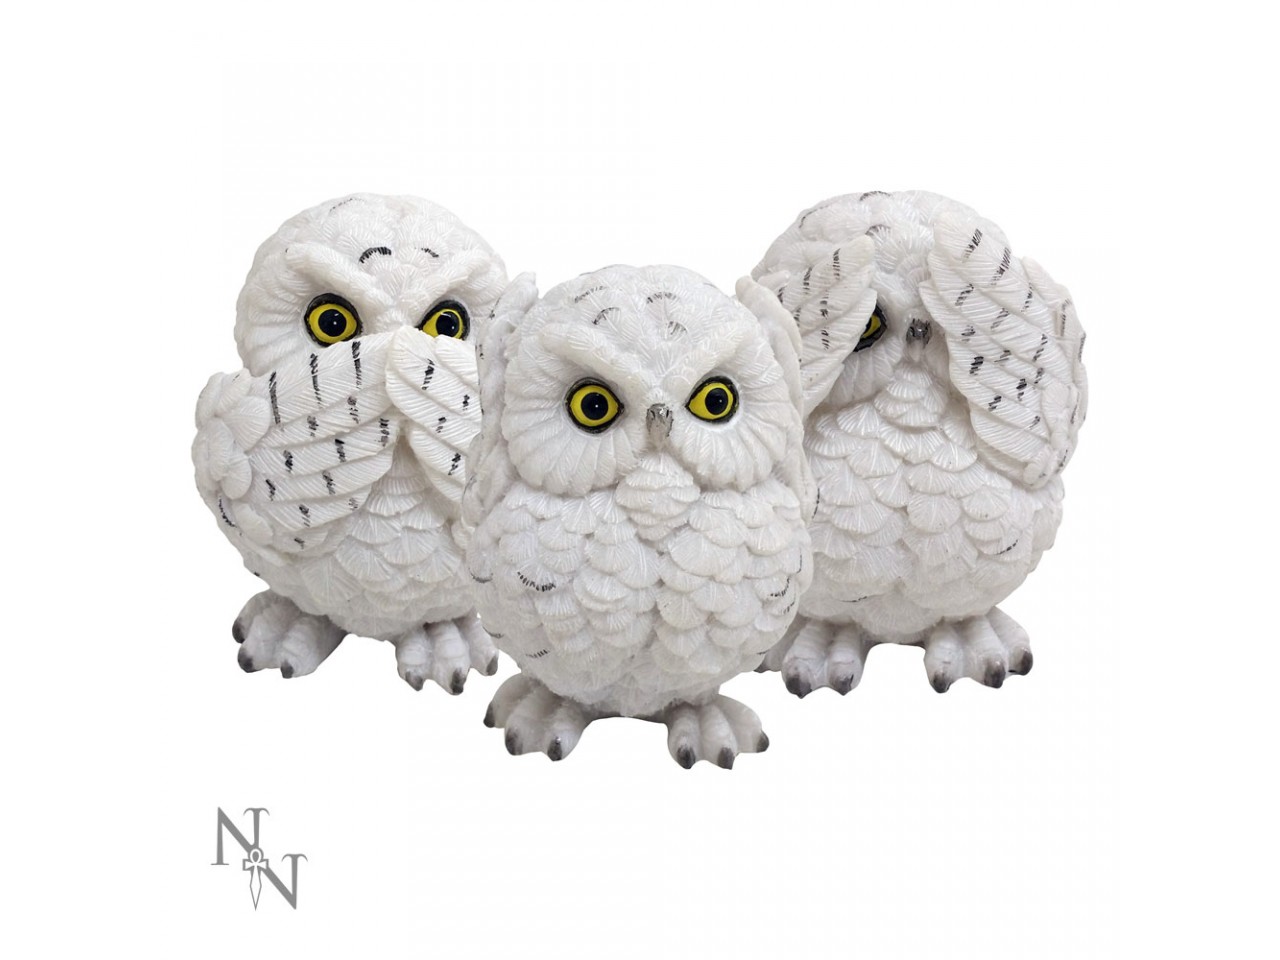 Three Wise Owl Figures